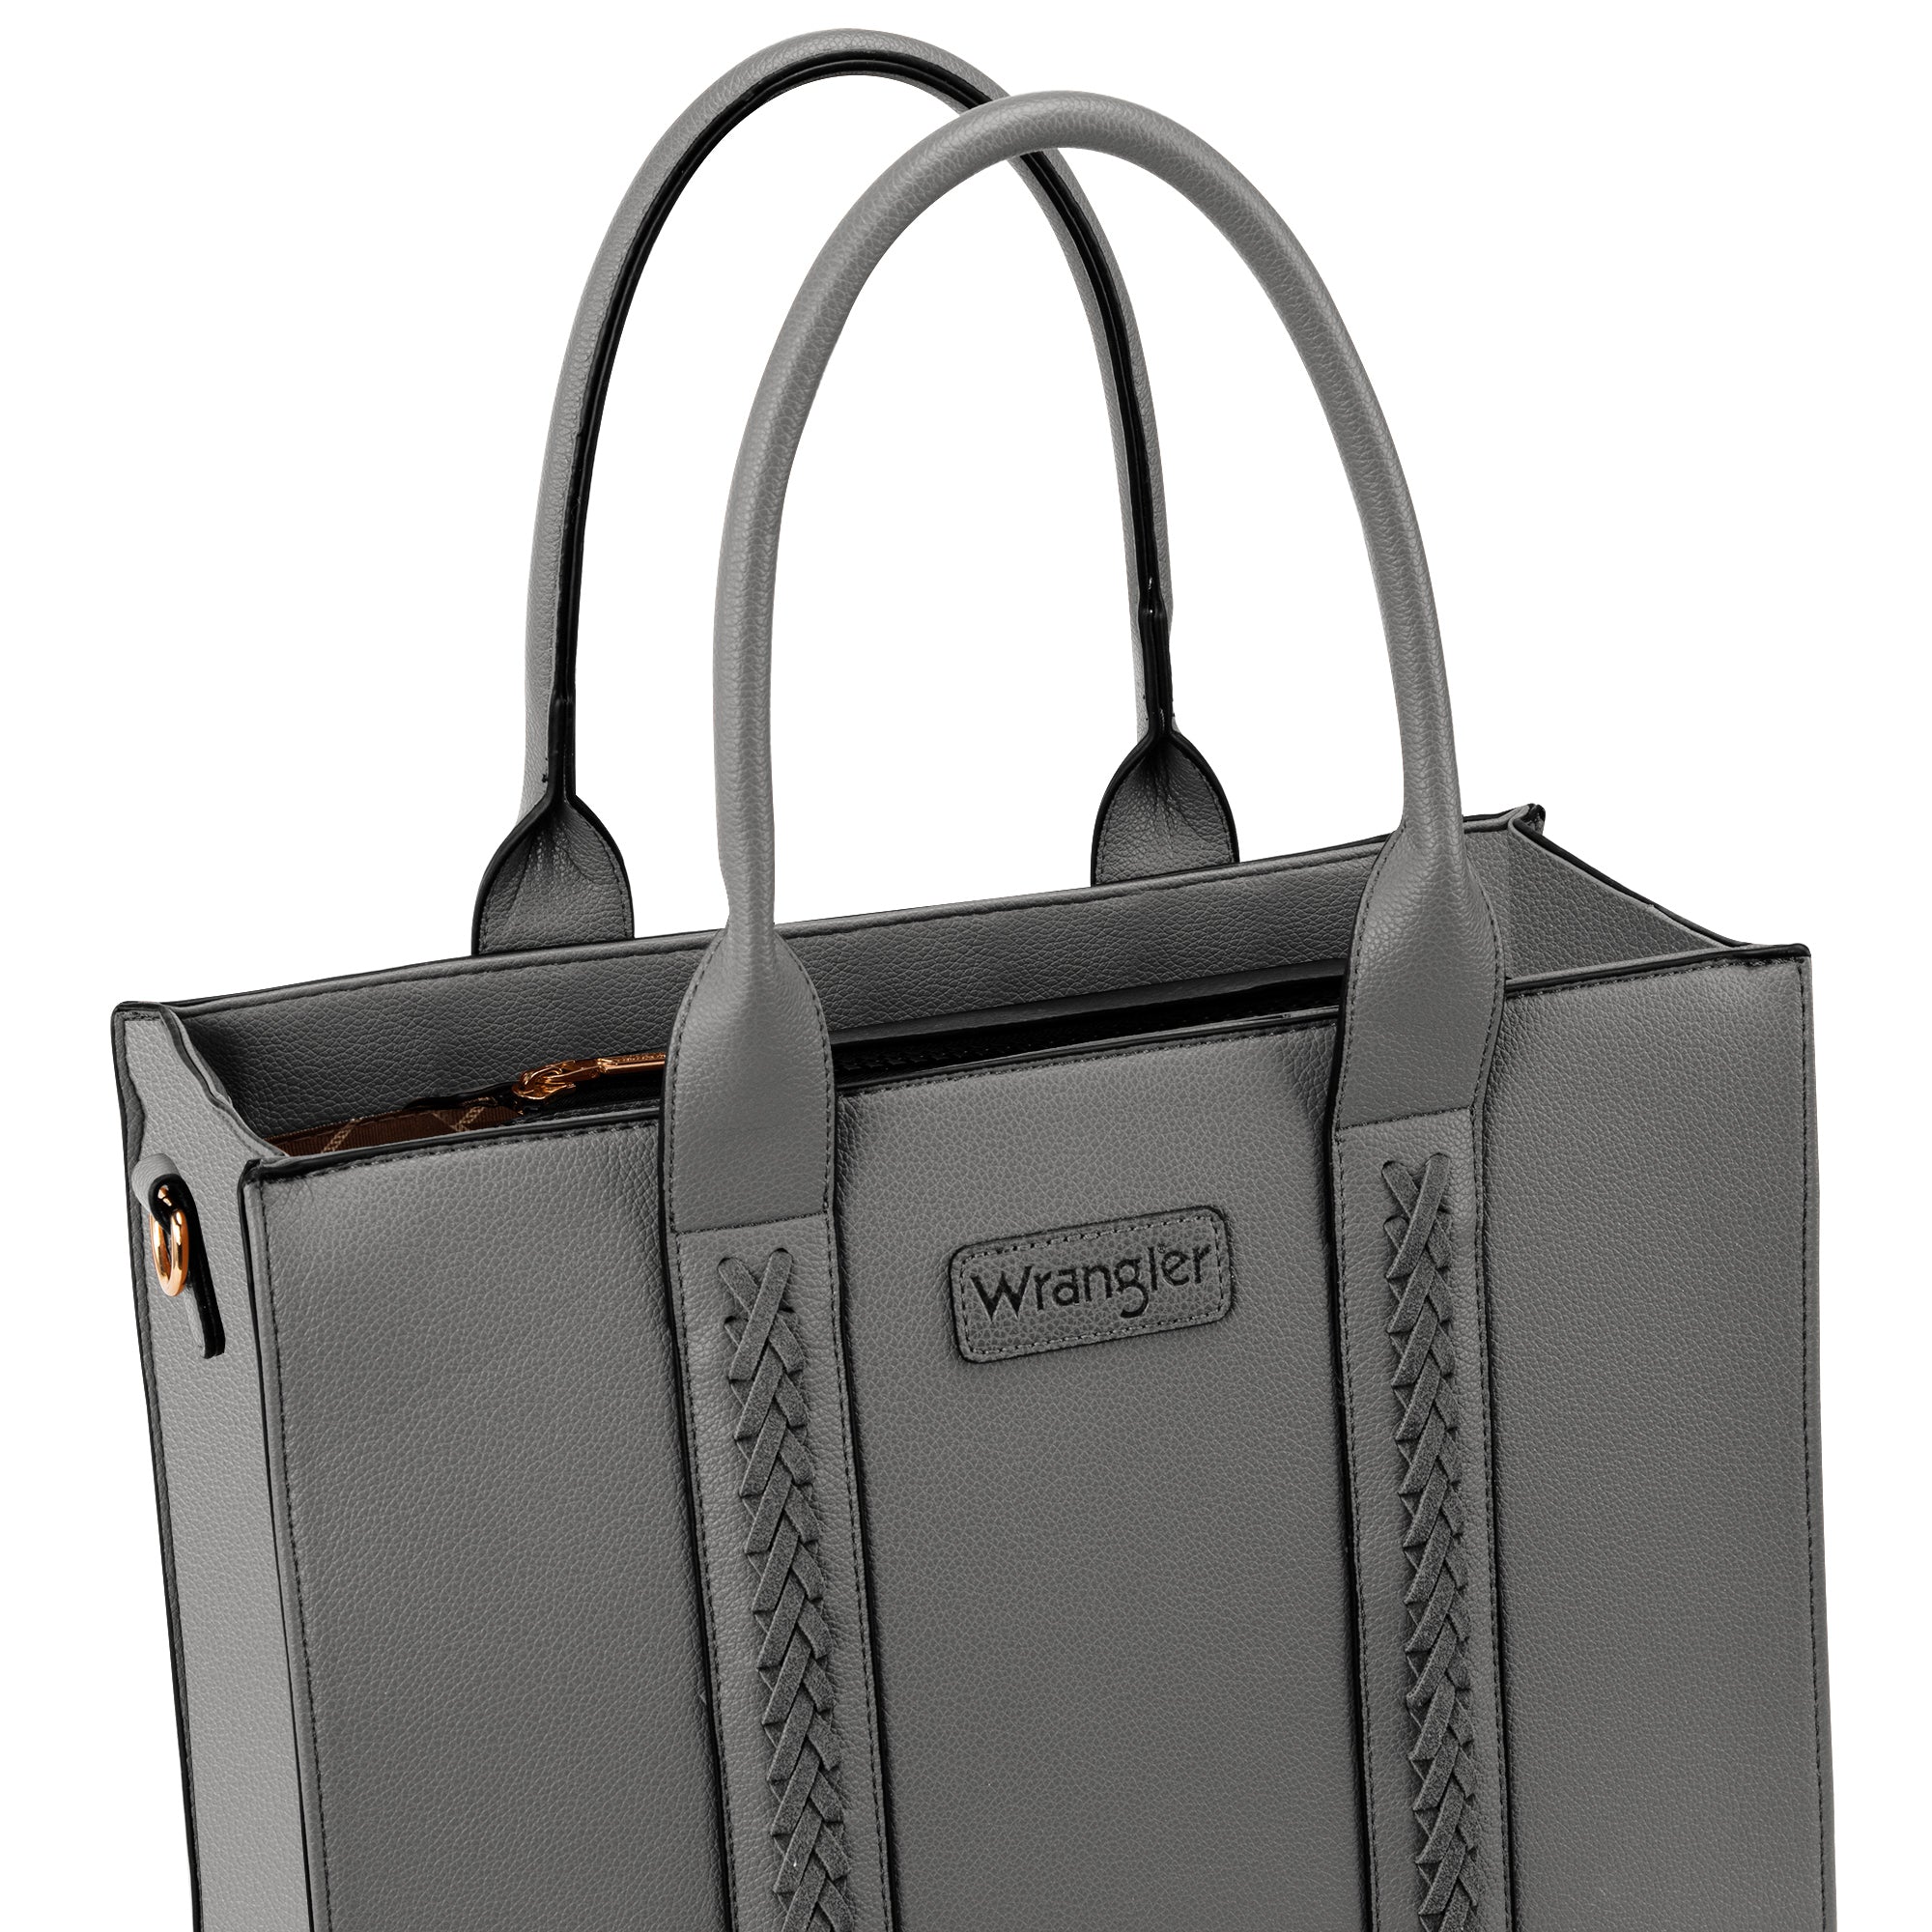 Wrangler Tote Bag for Women Zipper Shoulder Handbag - Cowgirl Wear